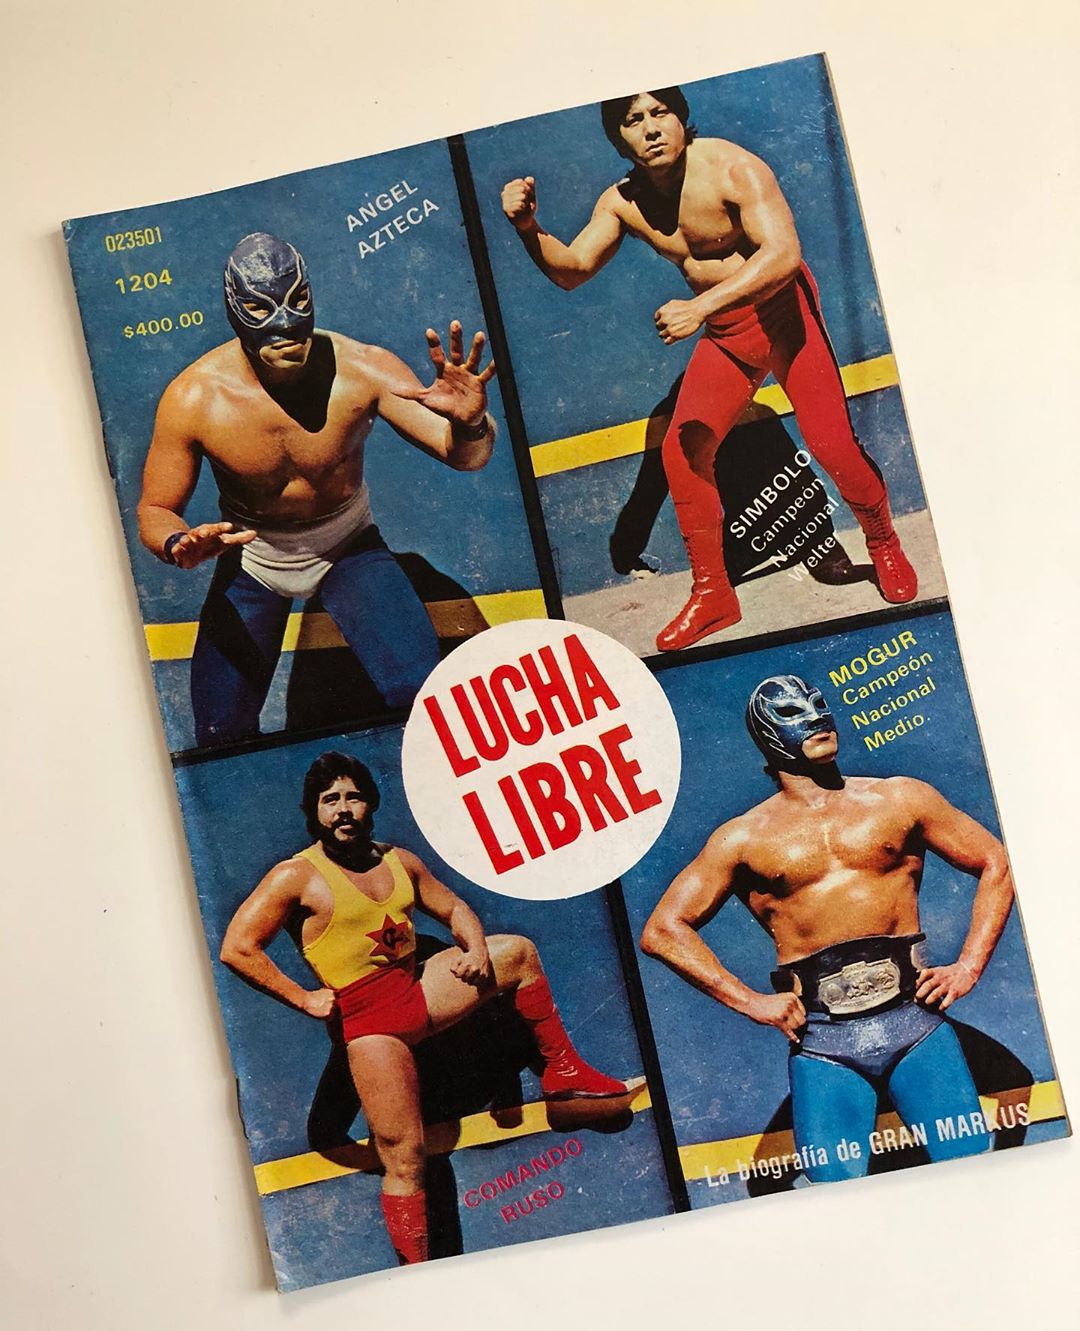 Lucha Libre Volume 1204